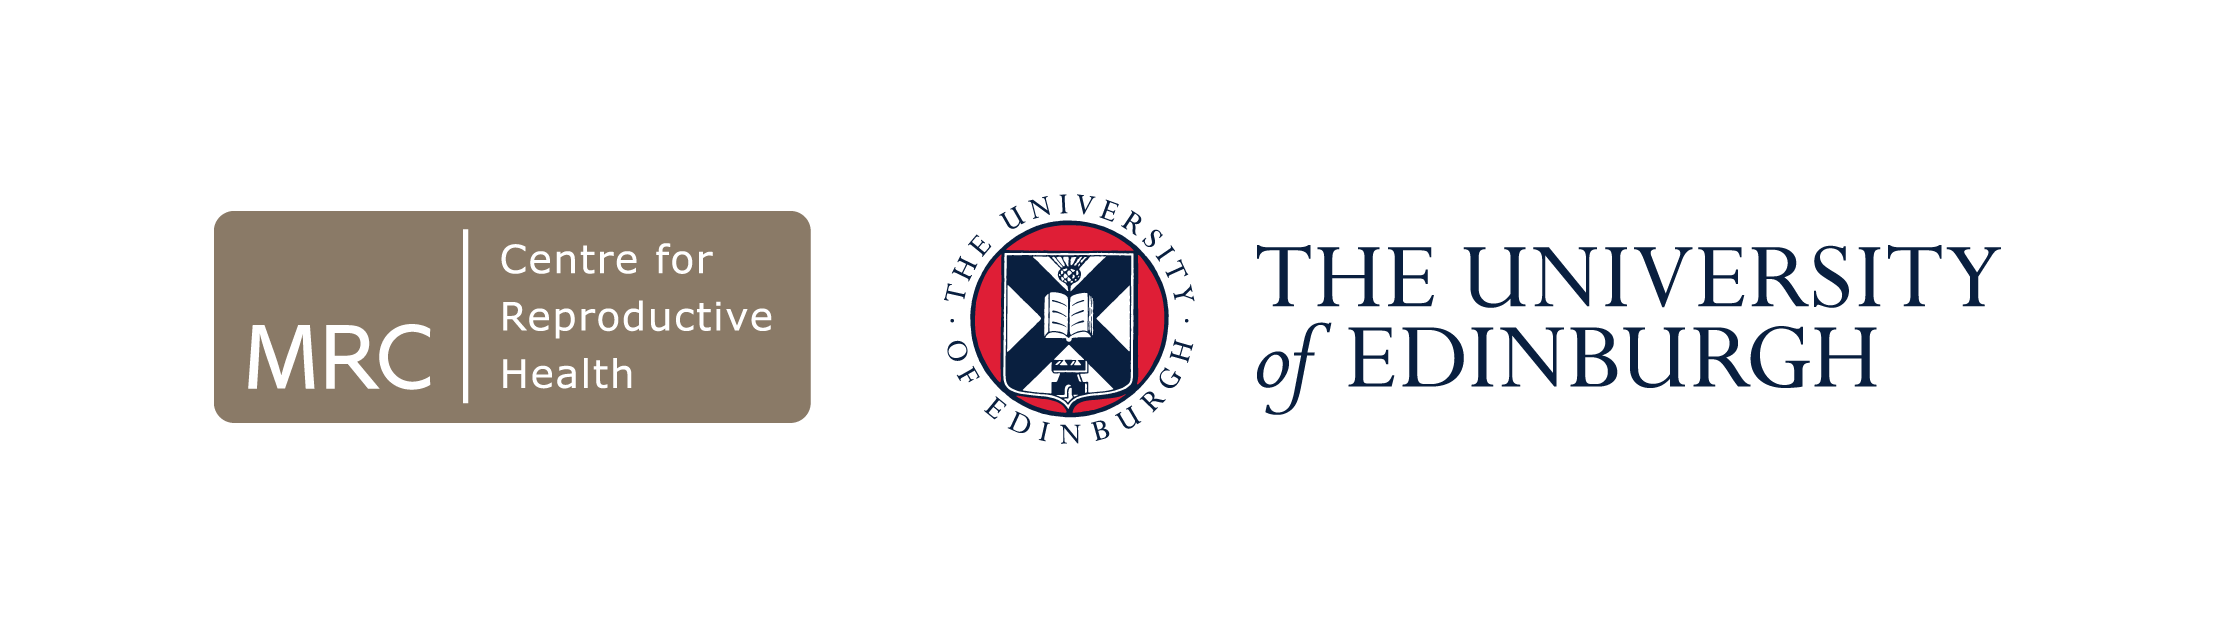 CRH Logo - Edinburgh establishment logos - About us - Medical Research Council